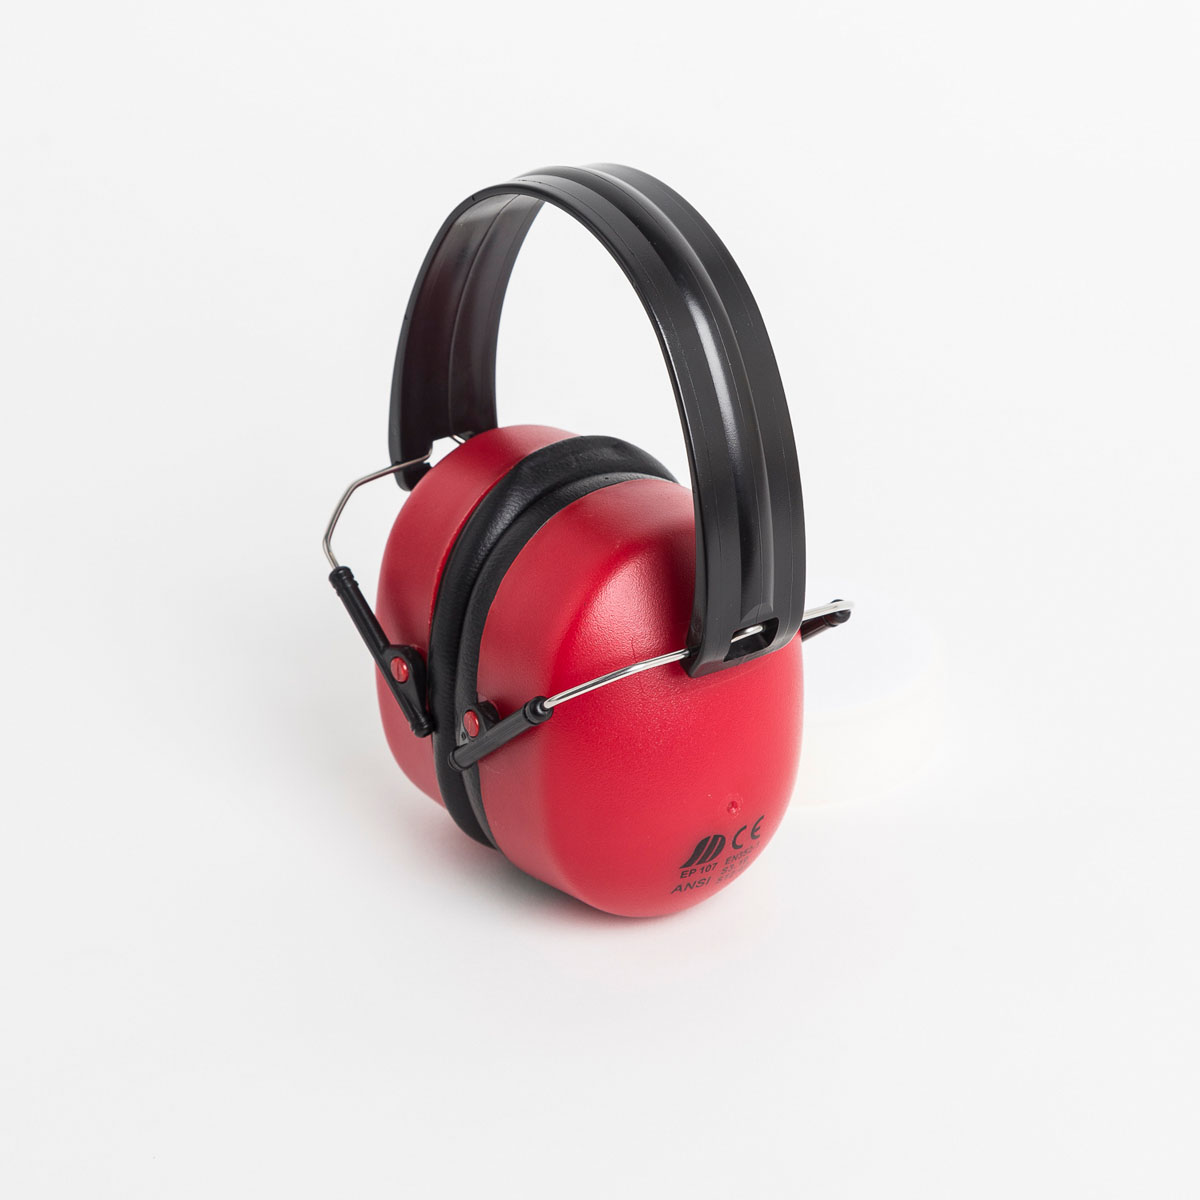 Gehörschutz "Profi", rot-schwarz, CE/EN352-1, 32dB